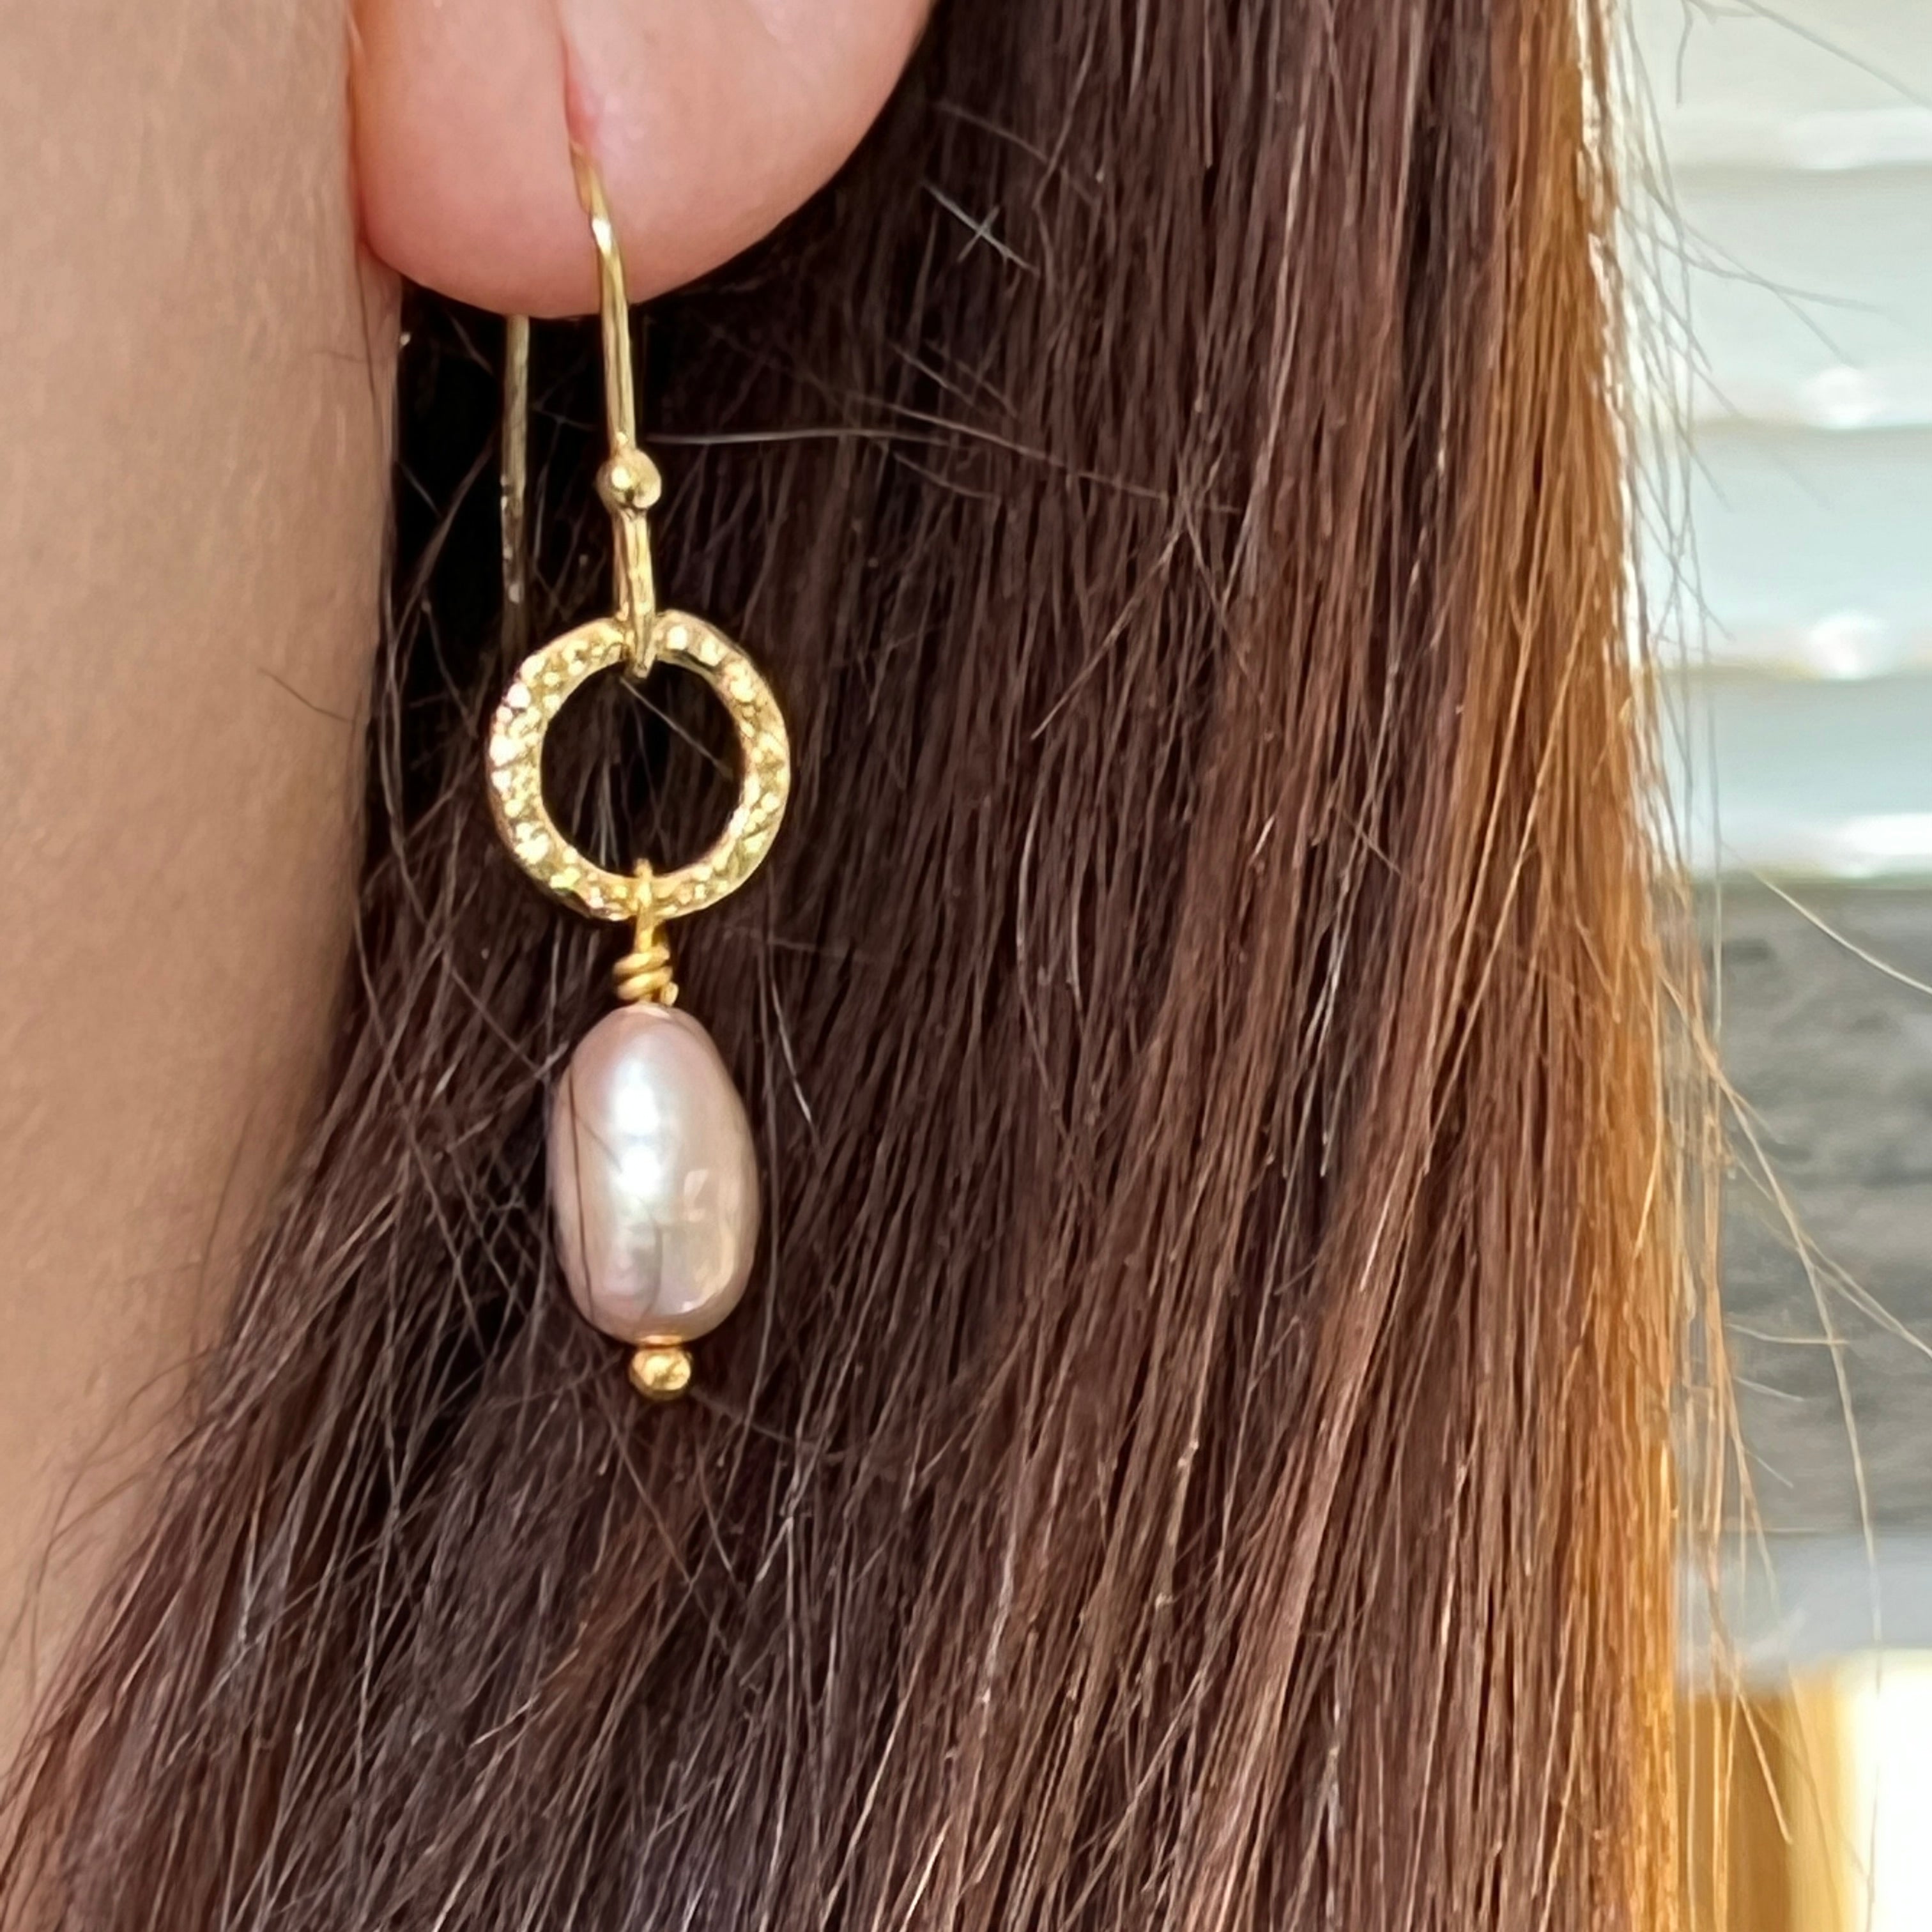 Gita Earrings Small Baroque Pink Pearl